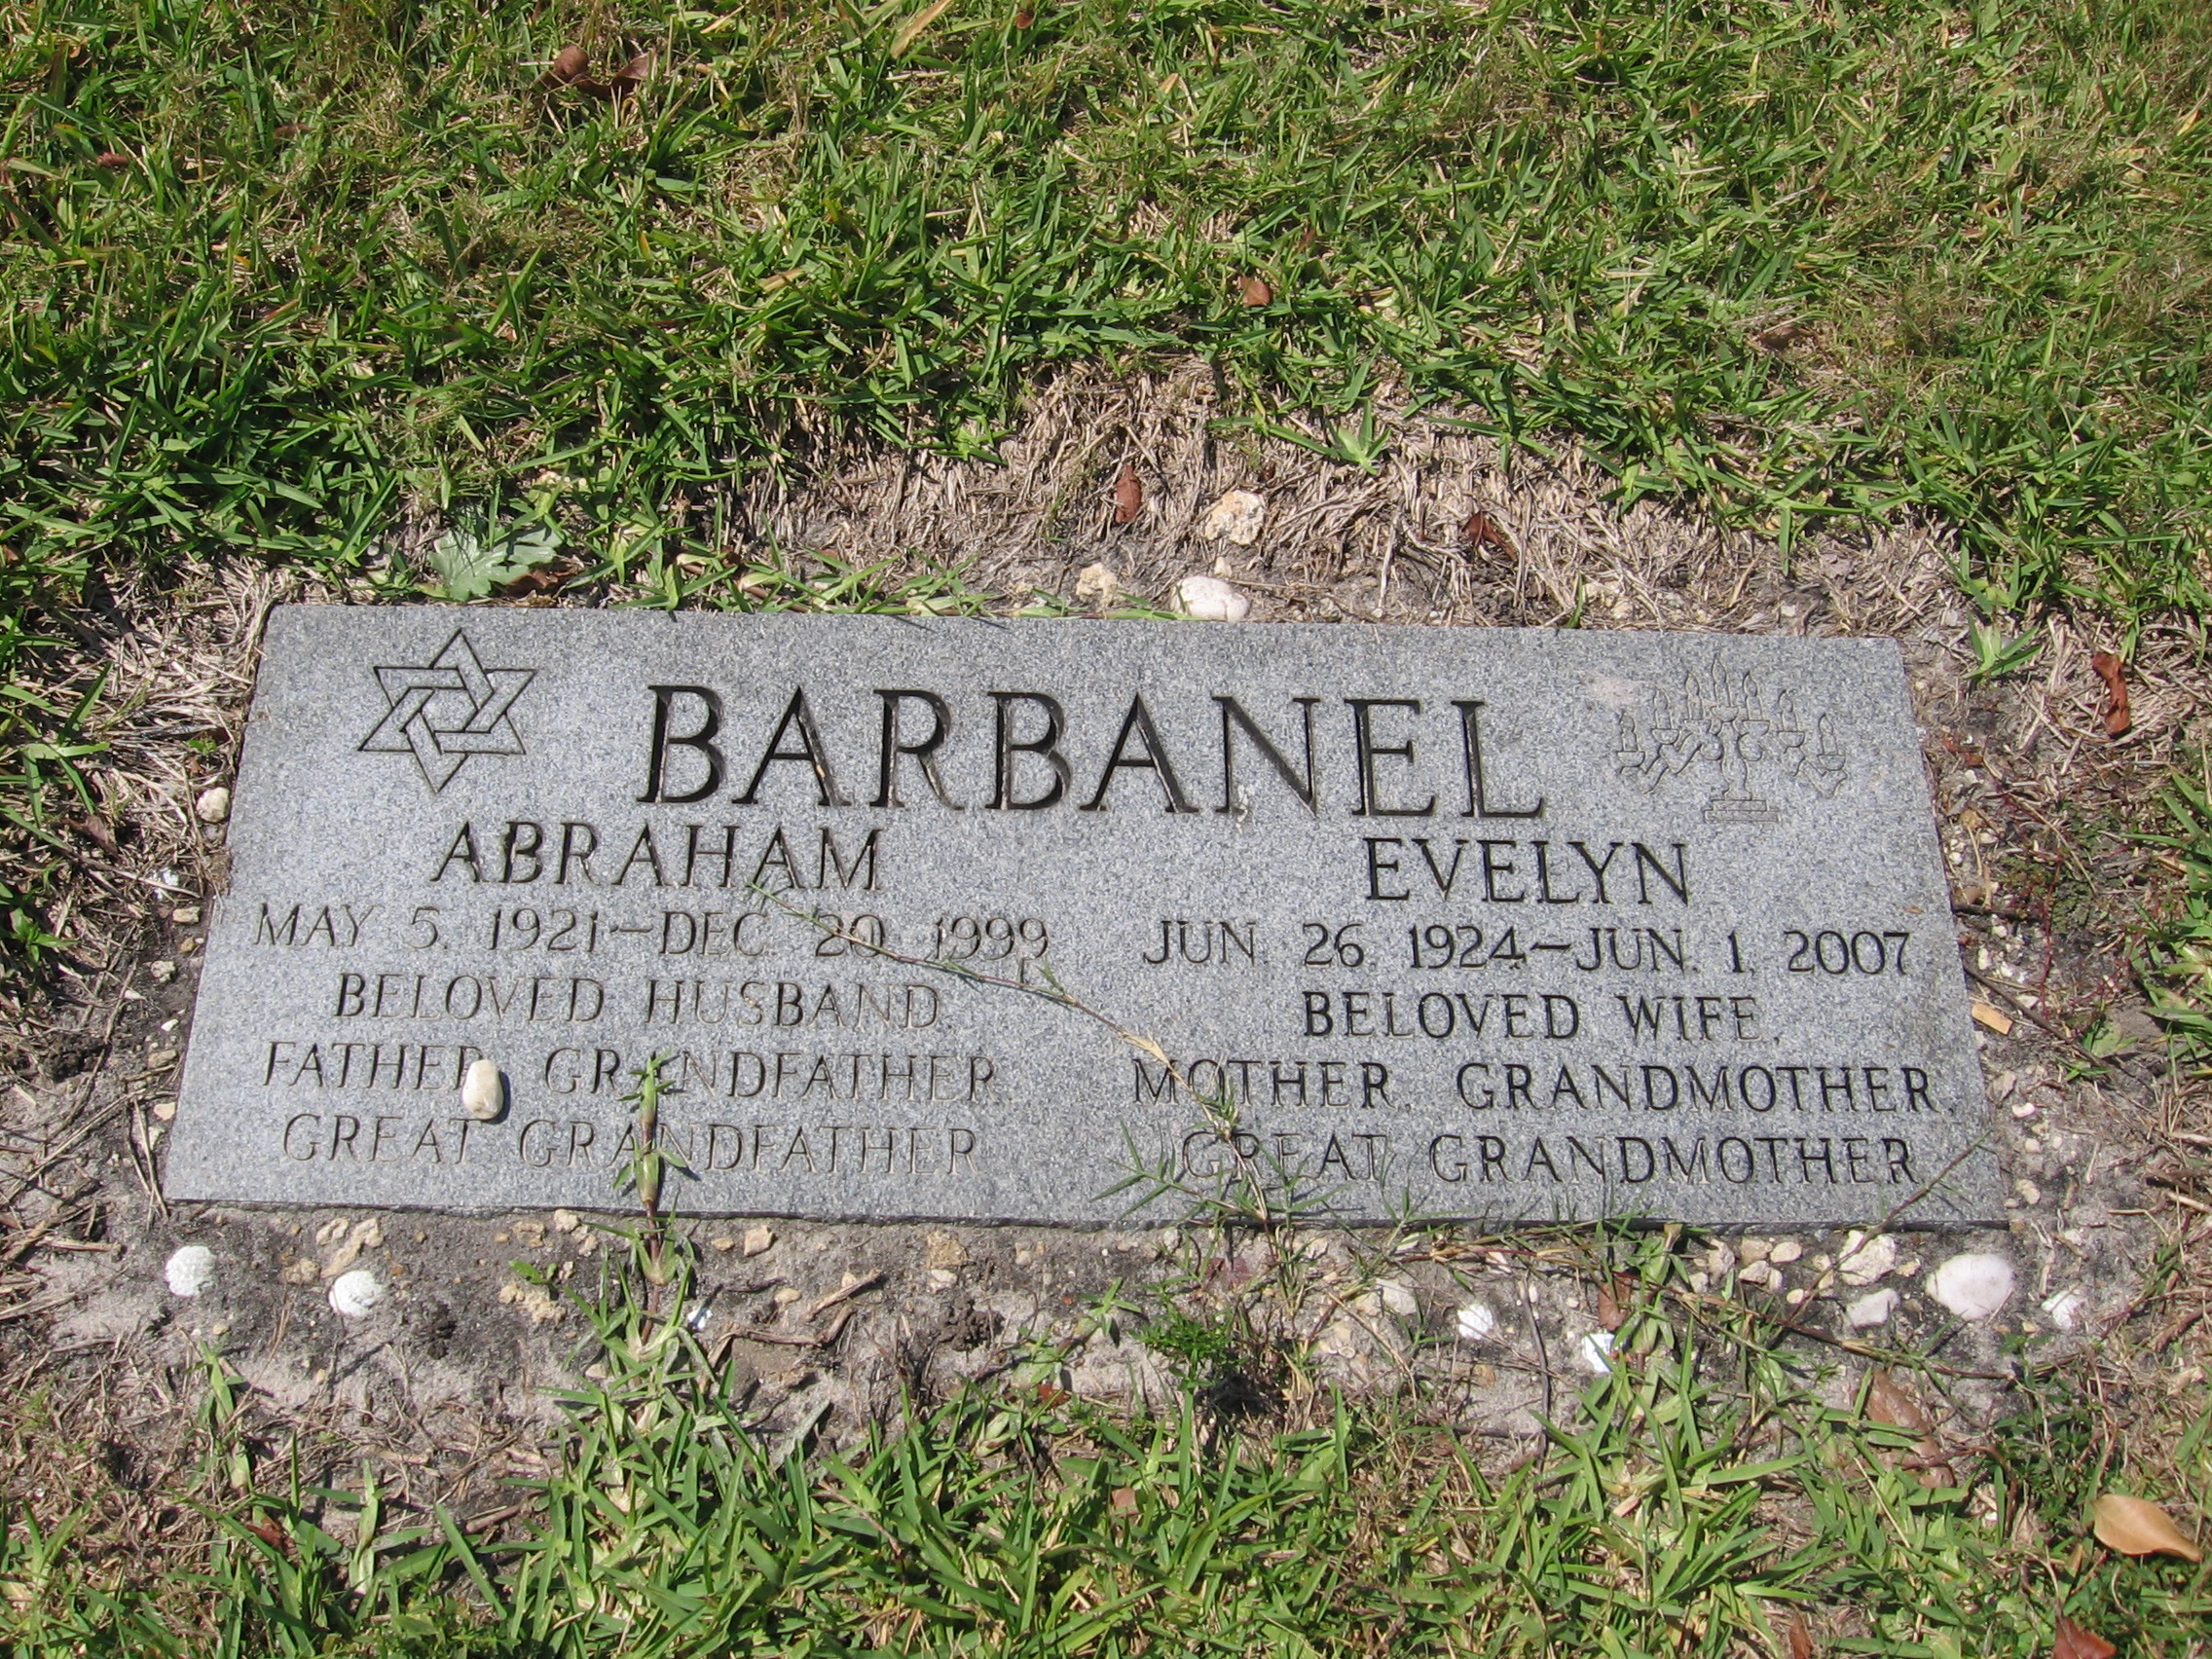 Abraham Barbanel